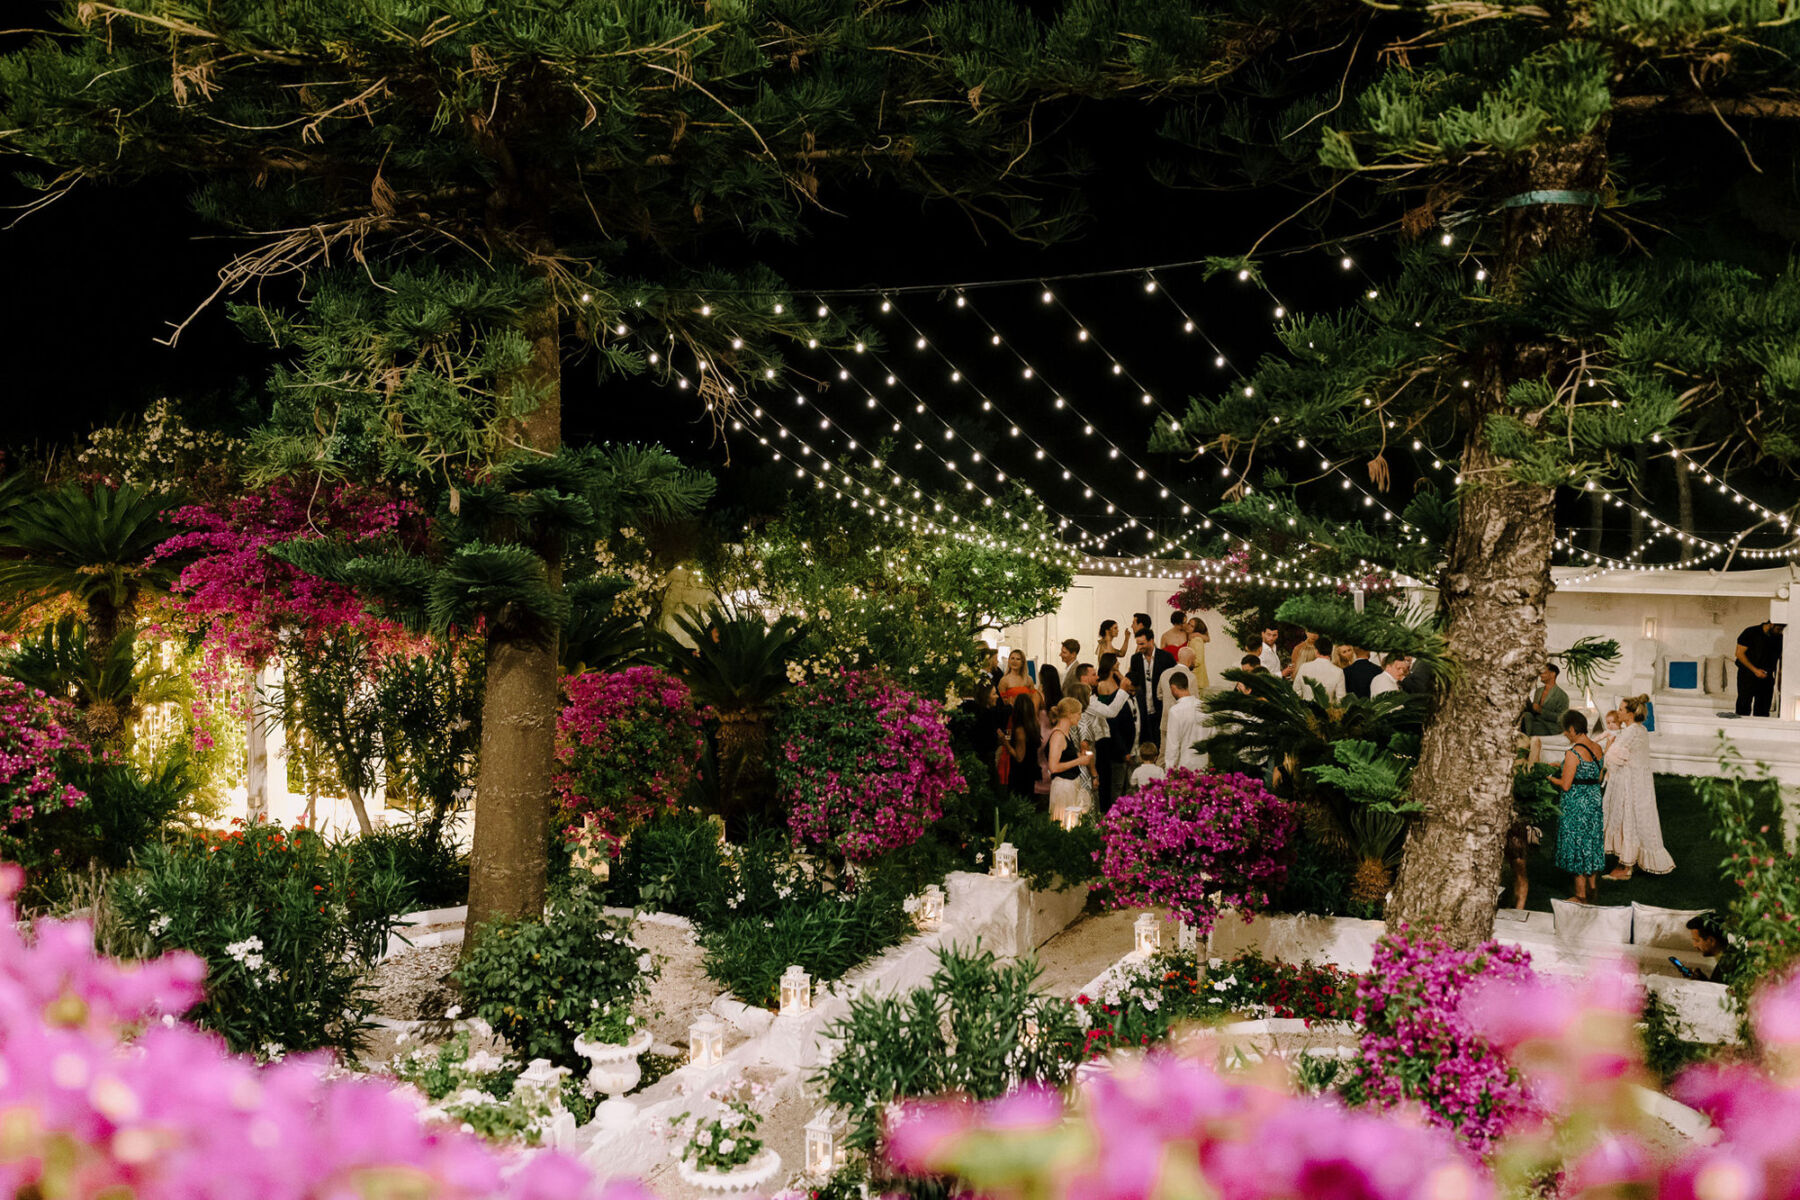 Canopy of lights at an Italian villa wedding.